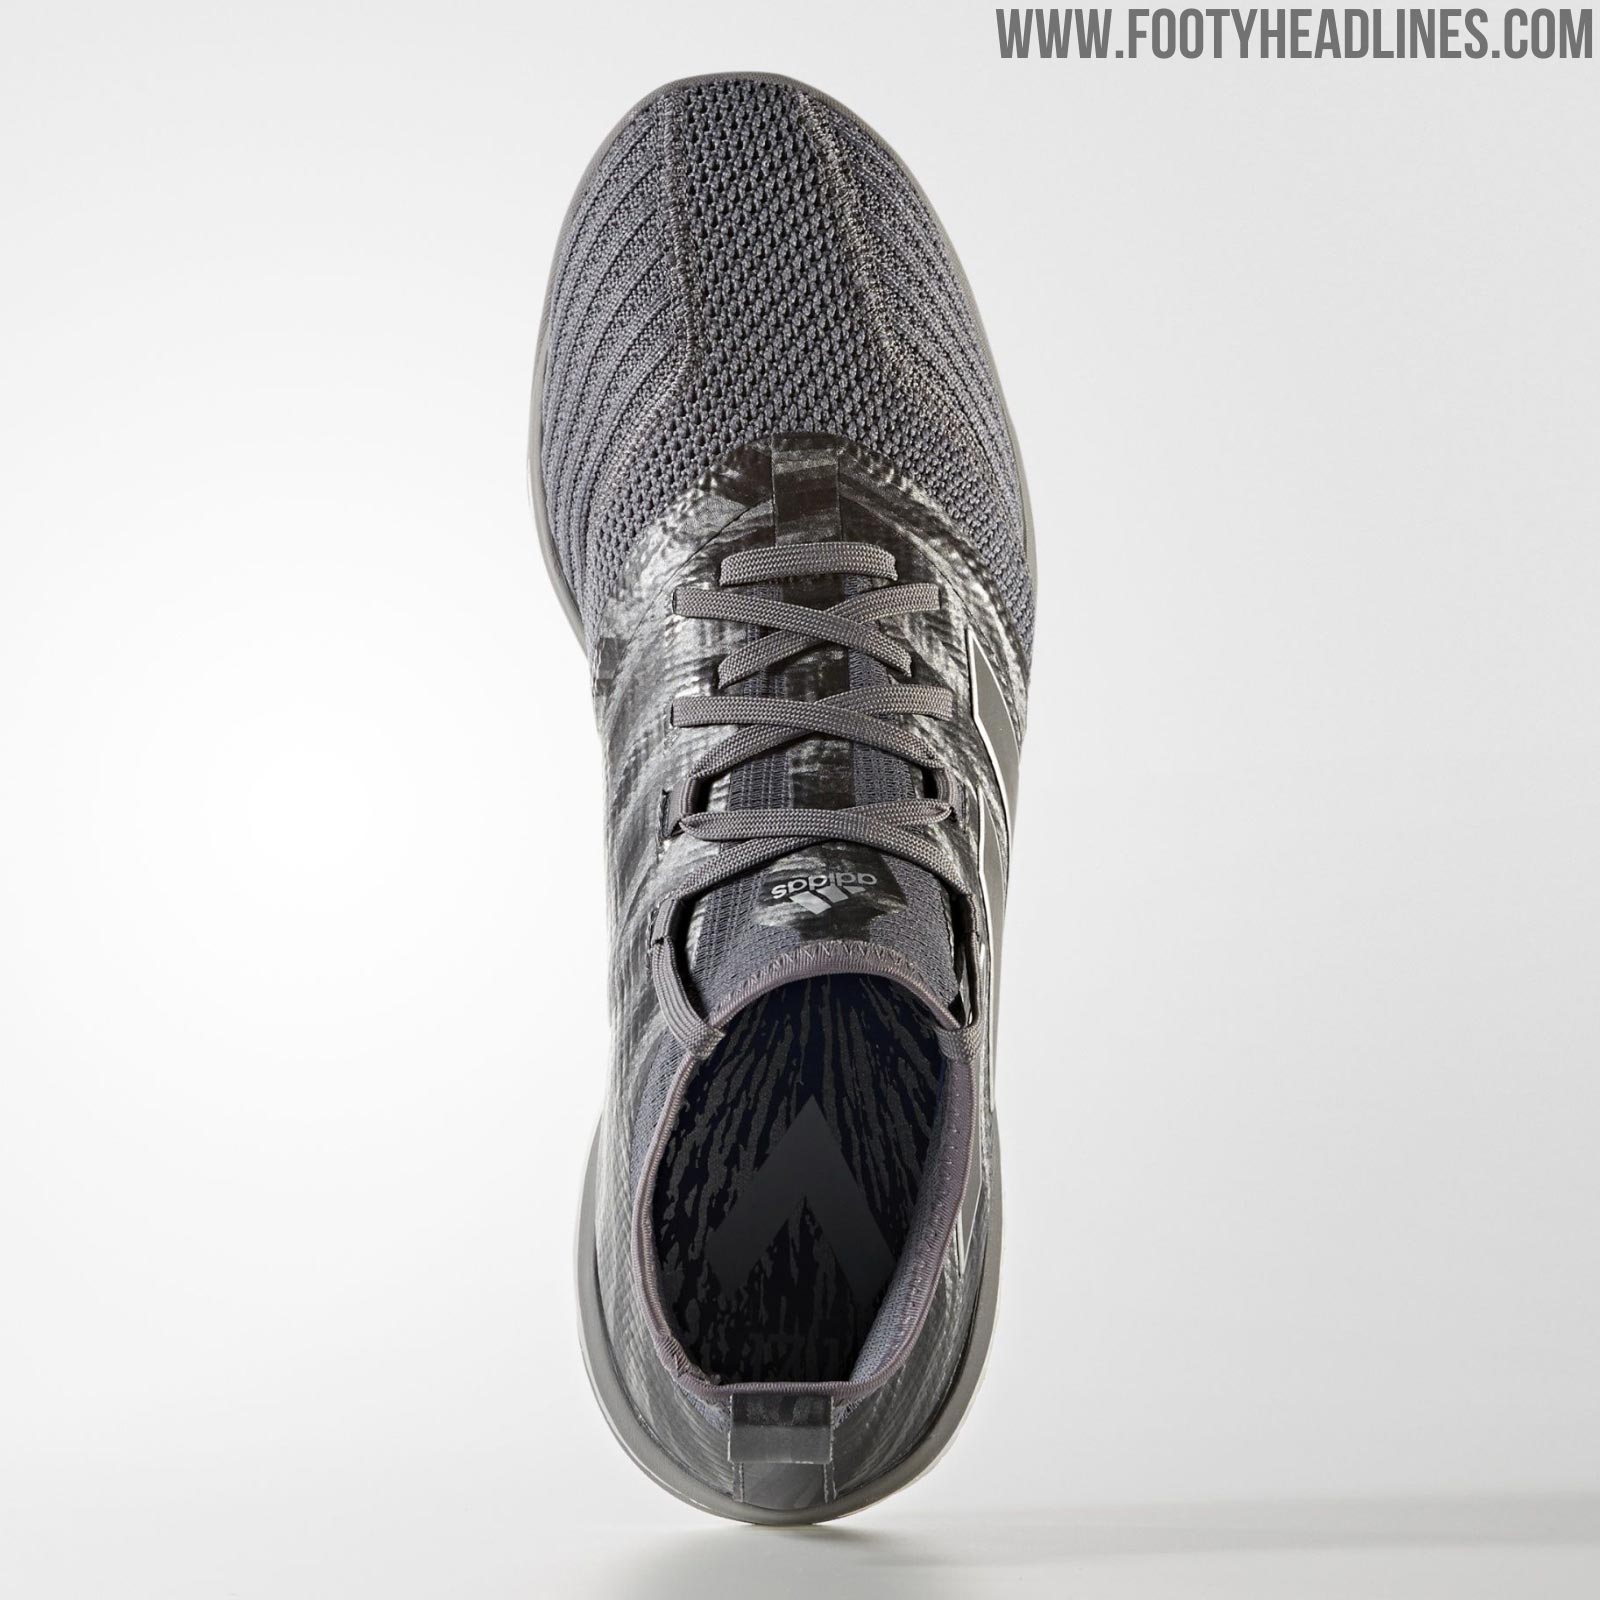 Control Adidas Ace Tango 17 Shoes Revealed - Footy Headlines